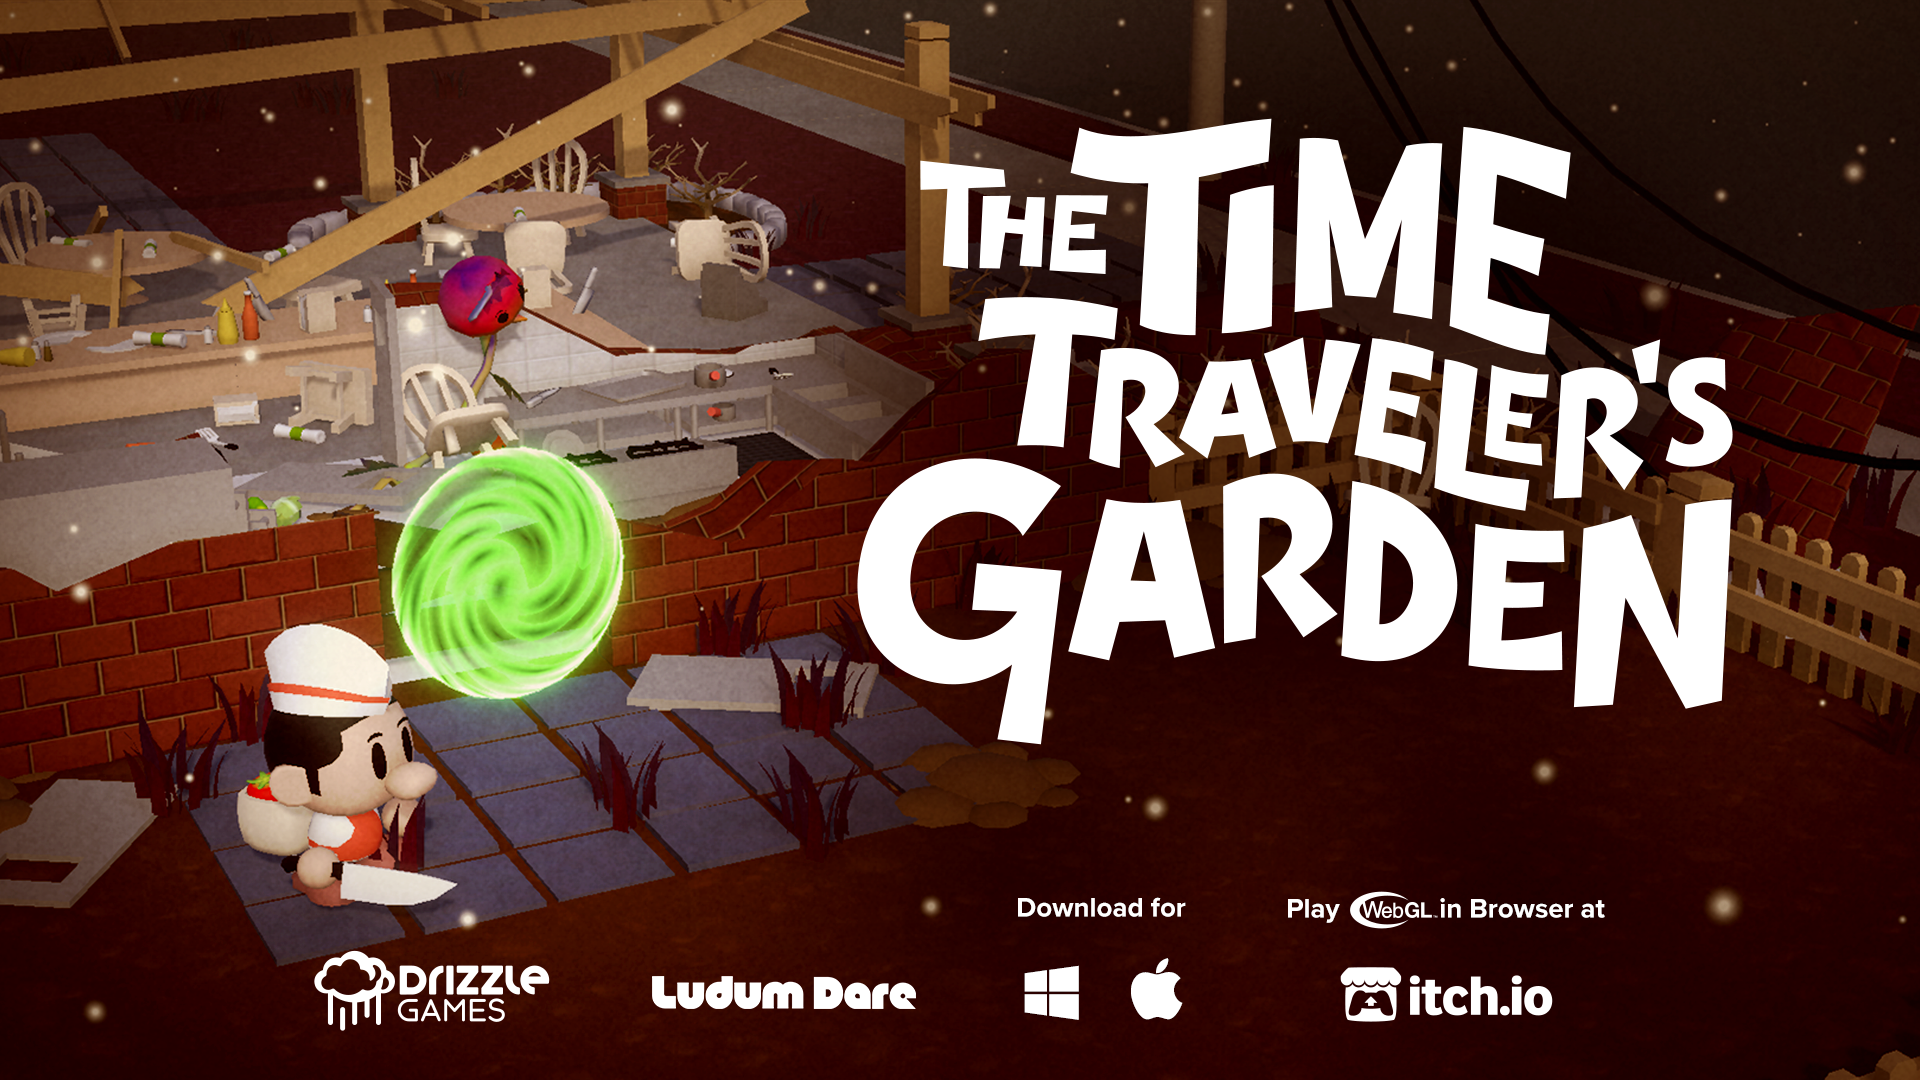 The Time Traveler's Garden